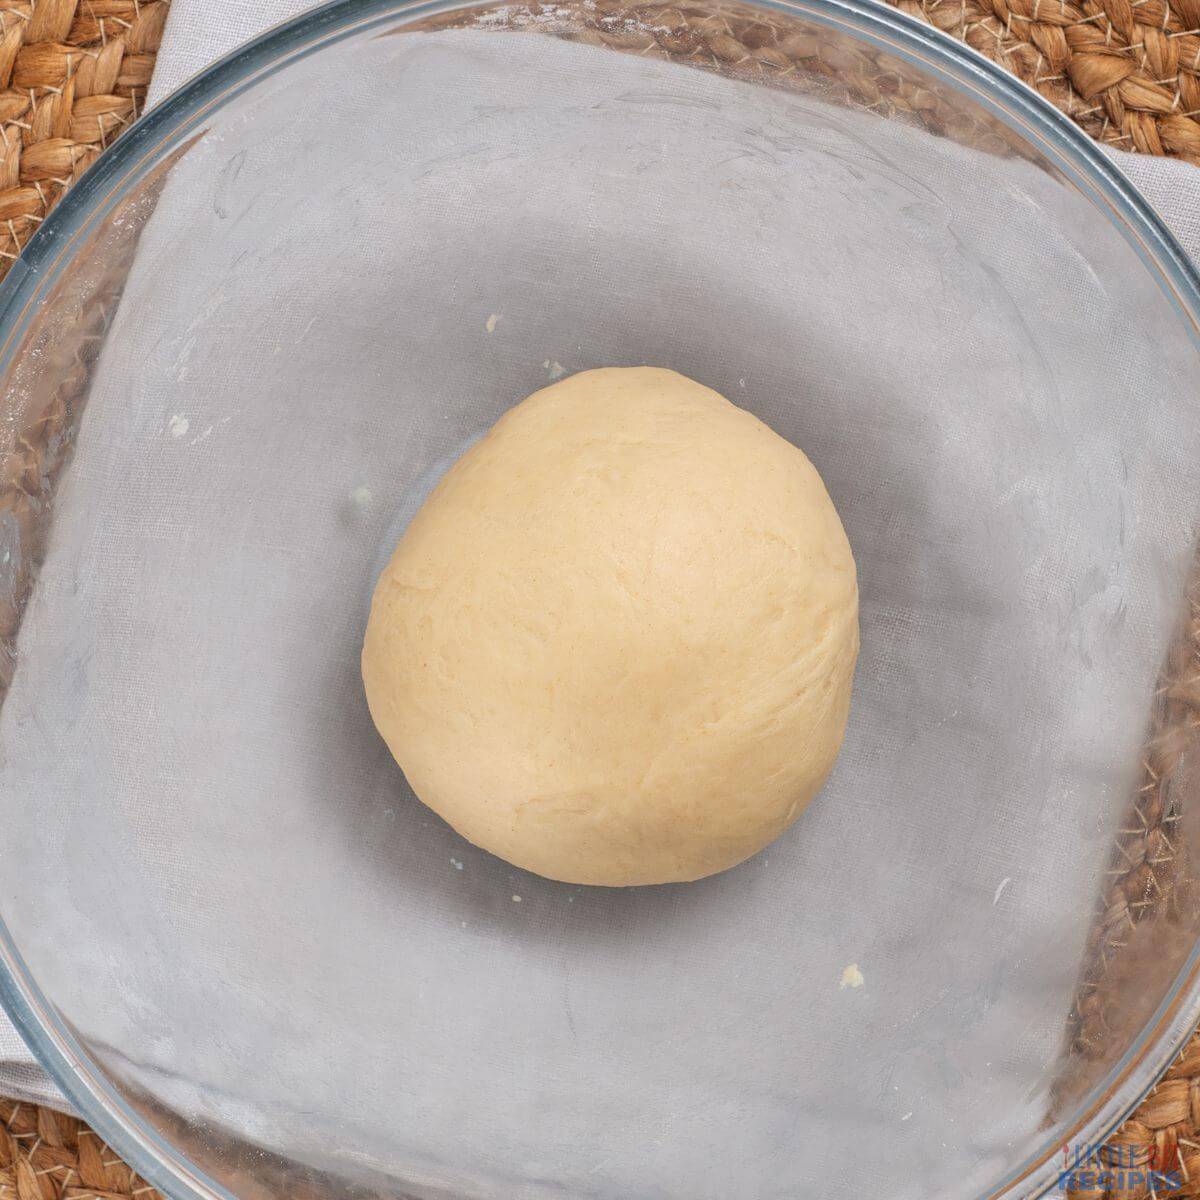 dough ball before rising.